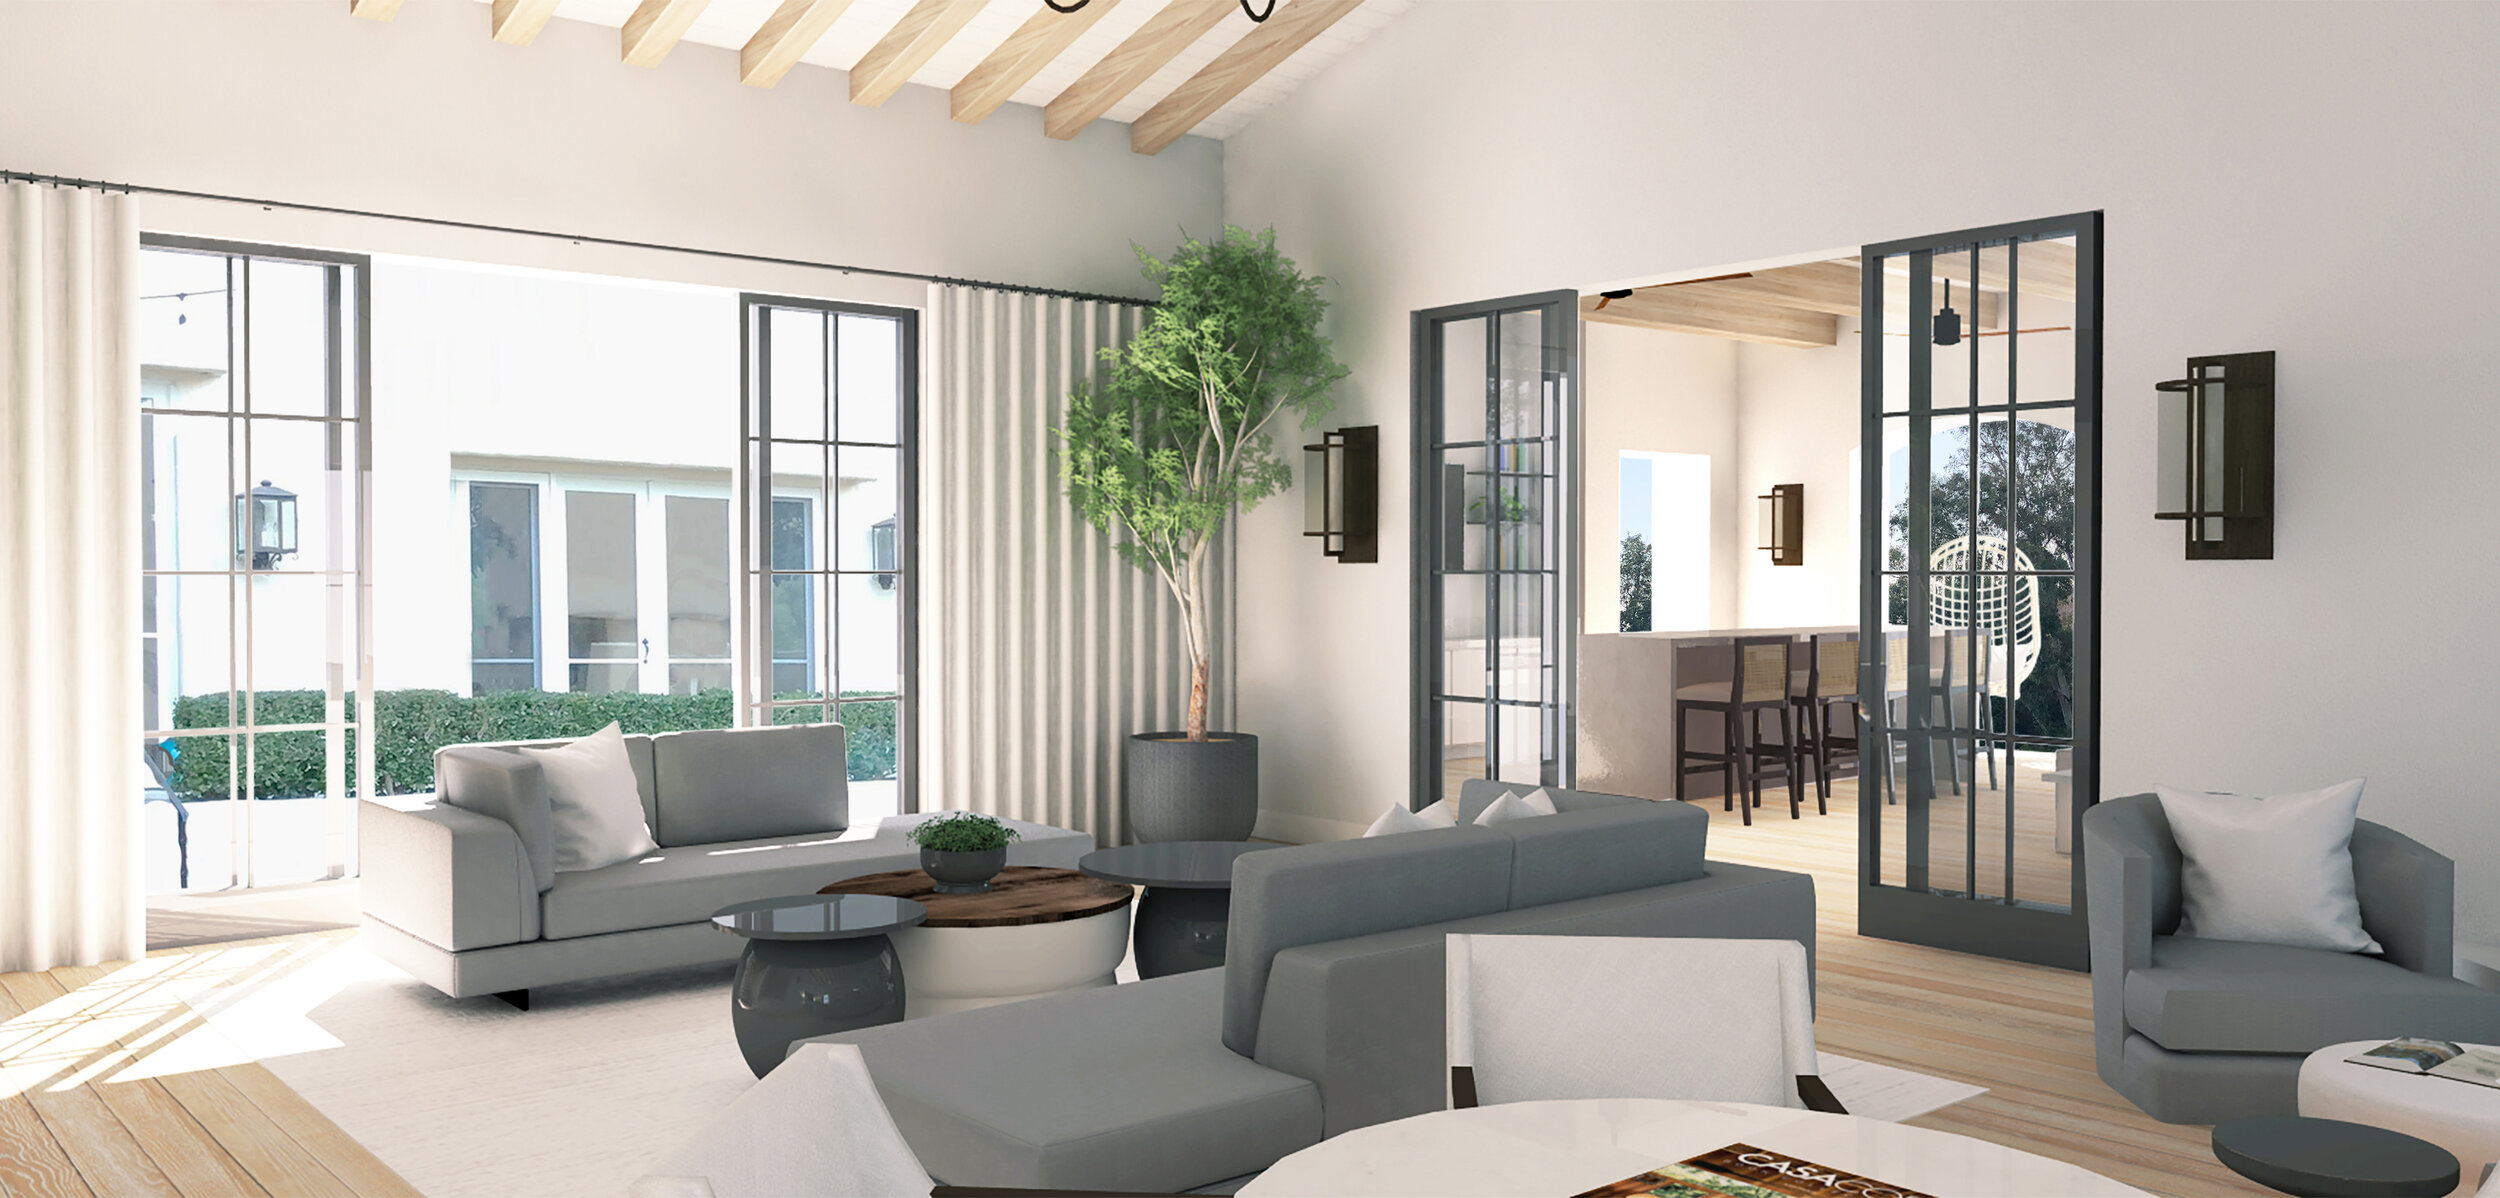 liz-tapper-interiors-living room-remodel-interior-design-rendering 2.jpg